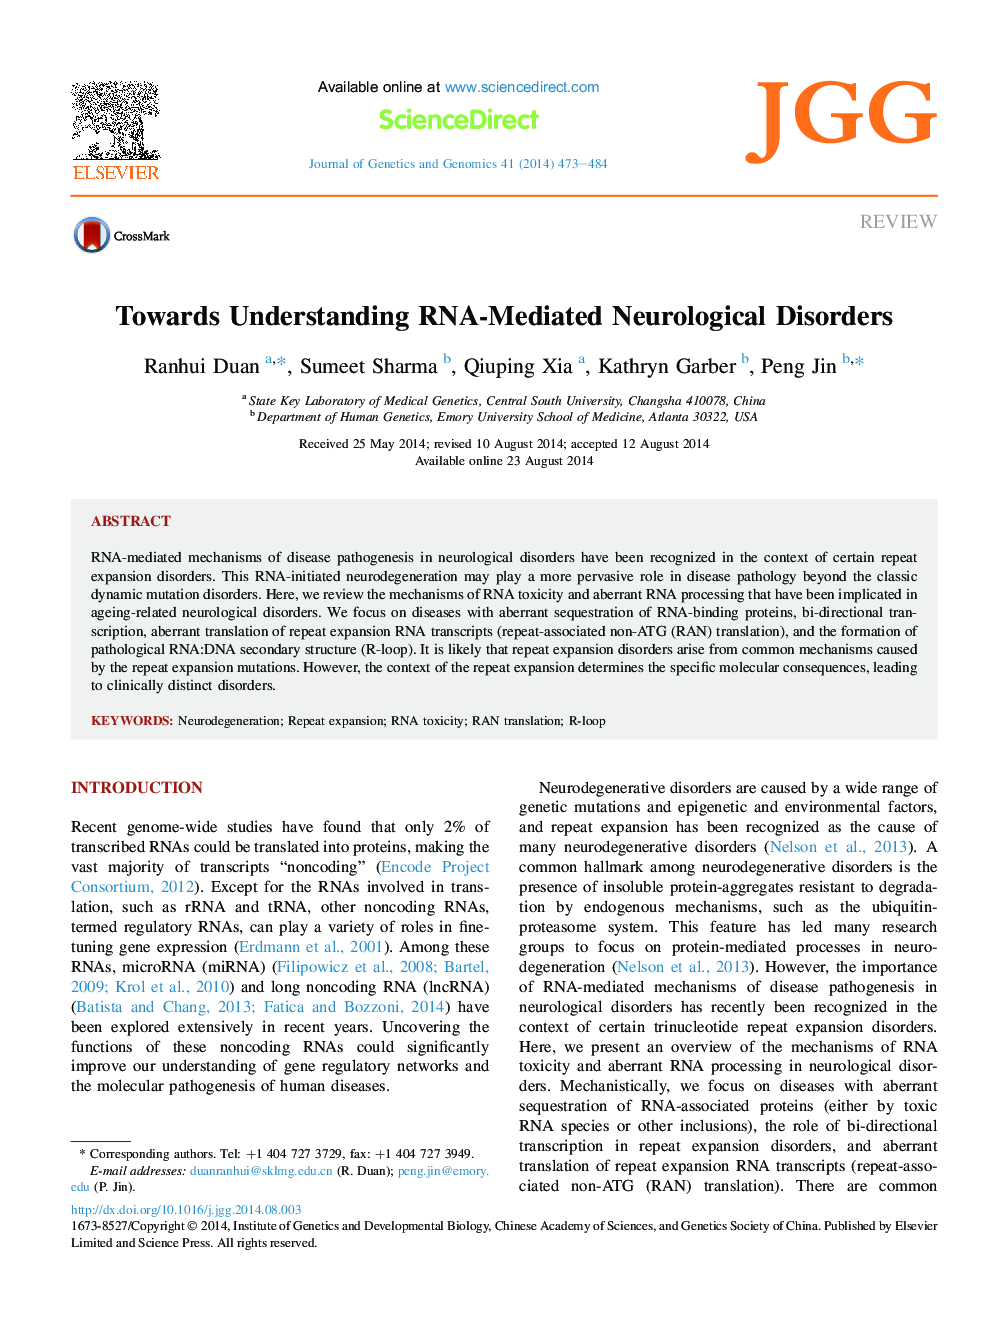 Towards Understanding RNA-Mediated Neurological Disorders